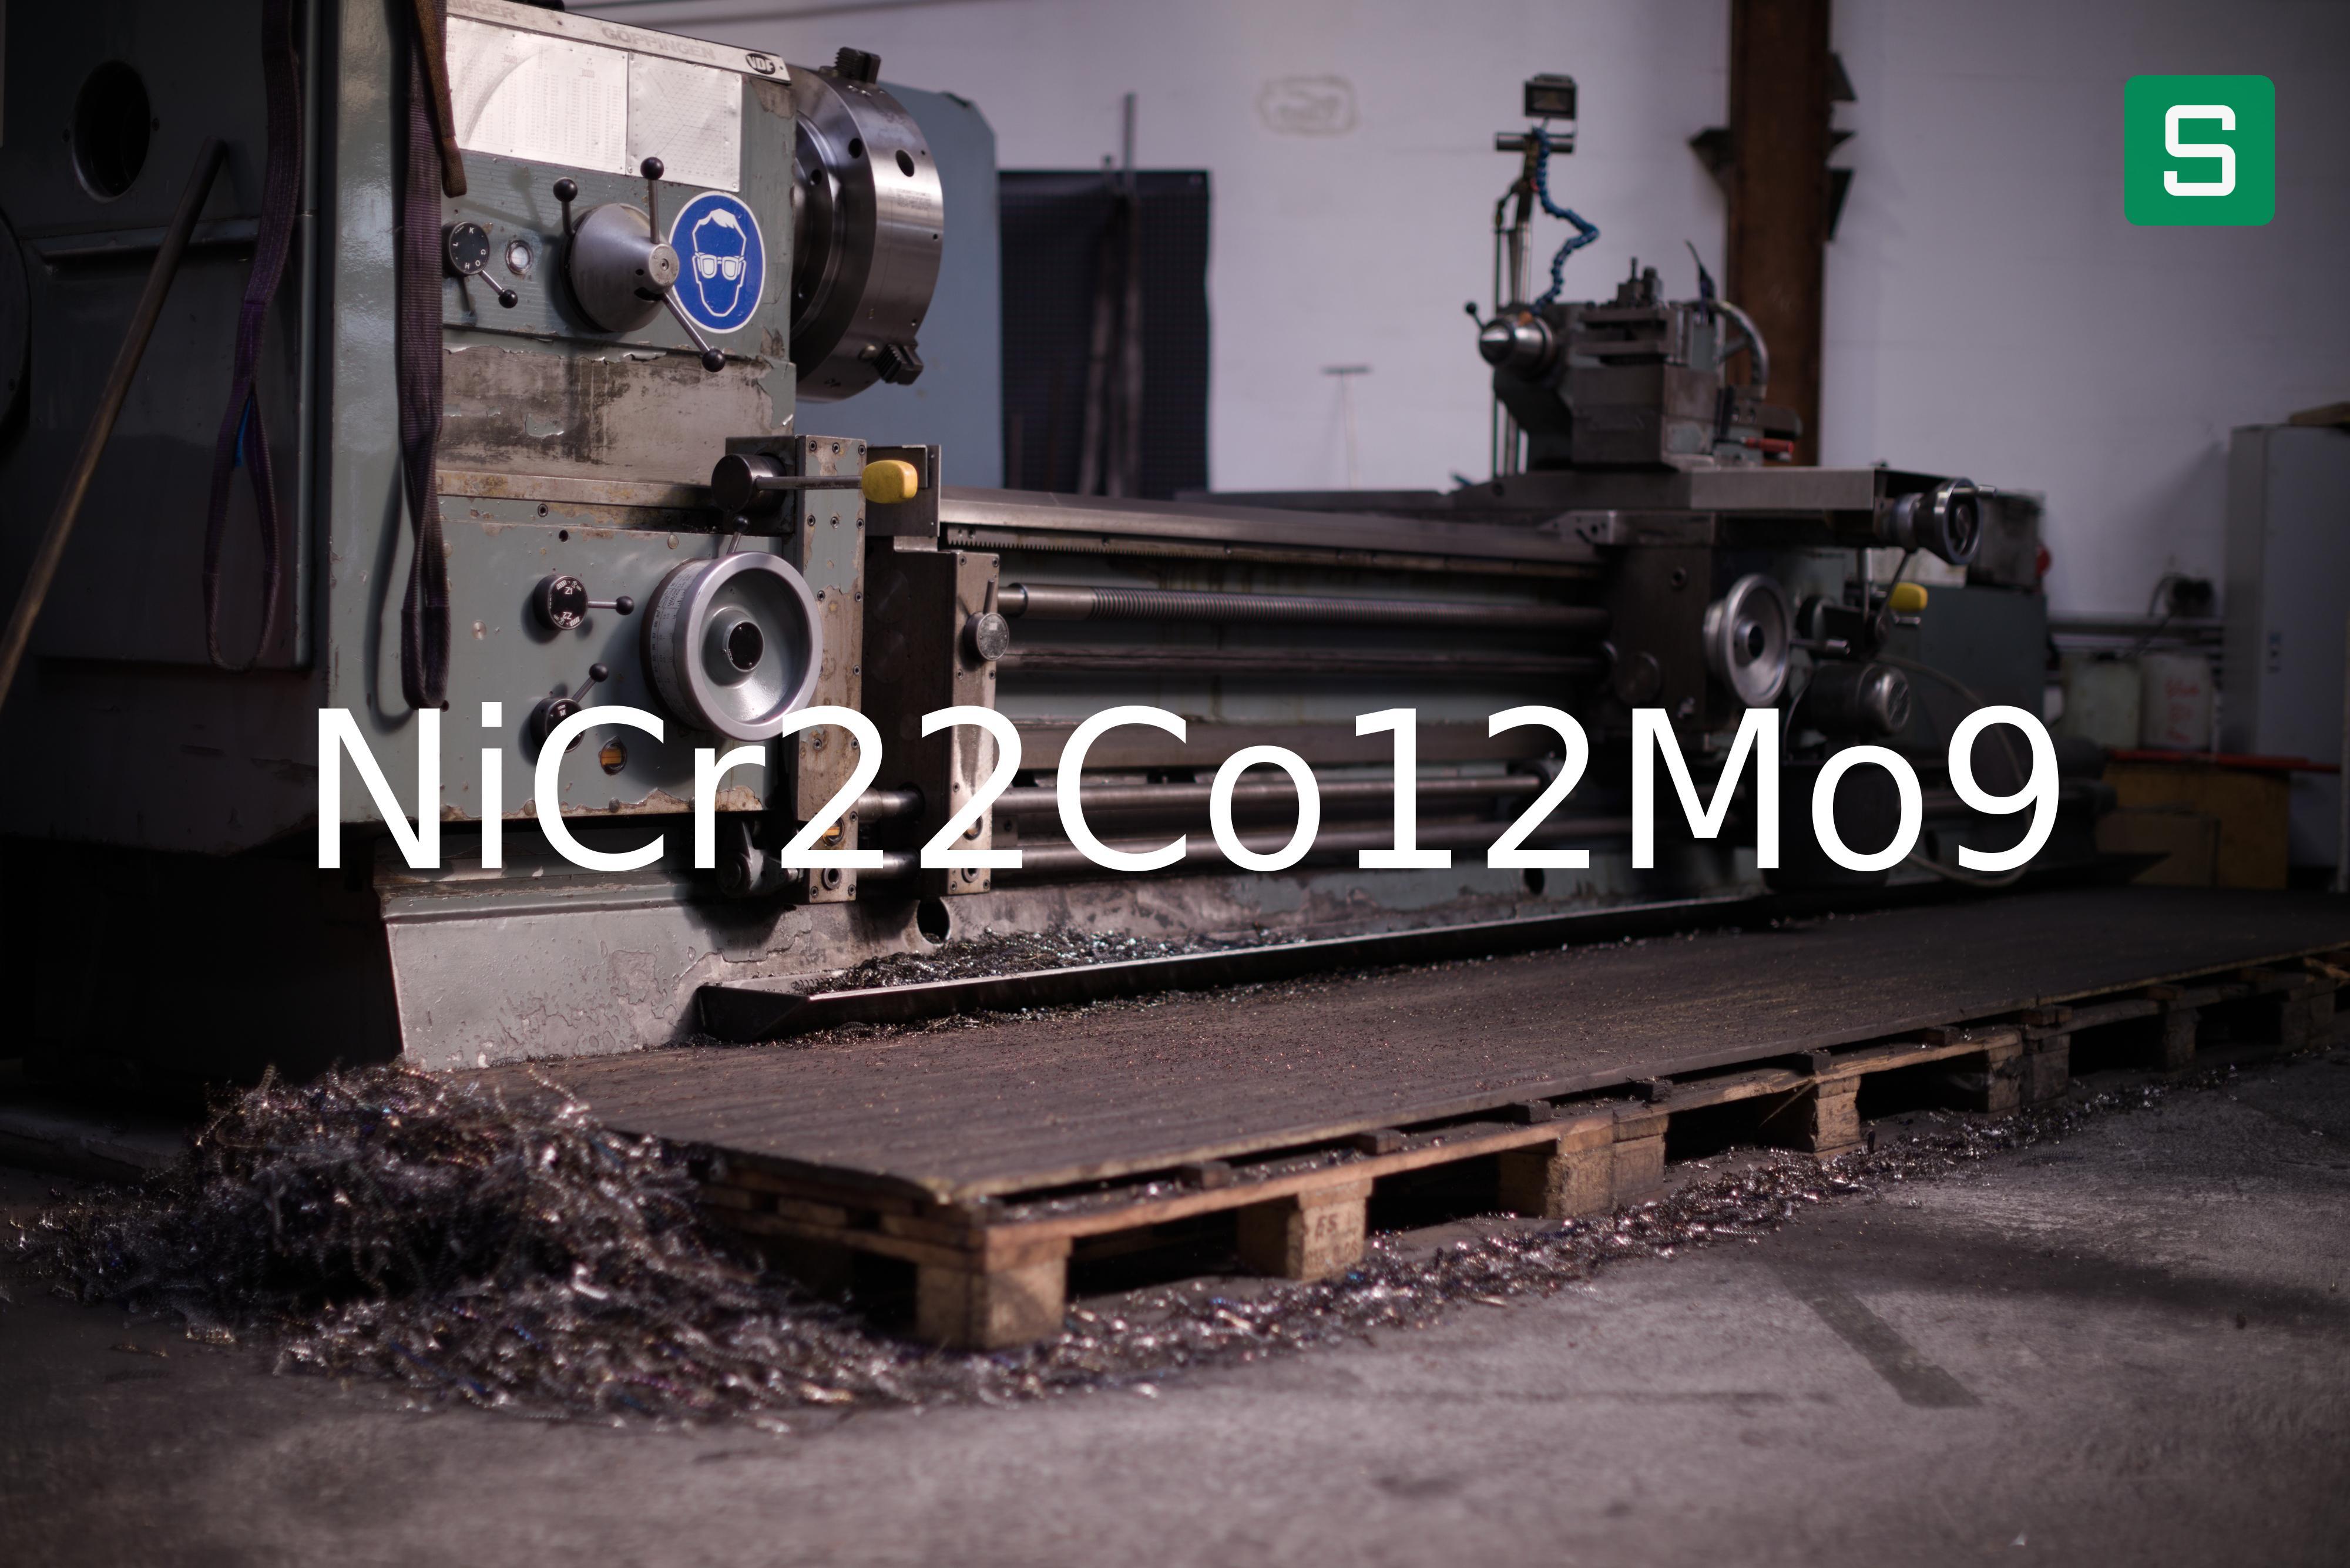 Steel Material: NiCr22Co12Mo9